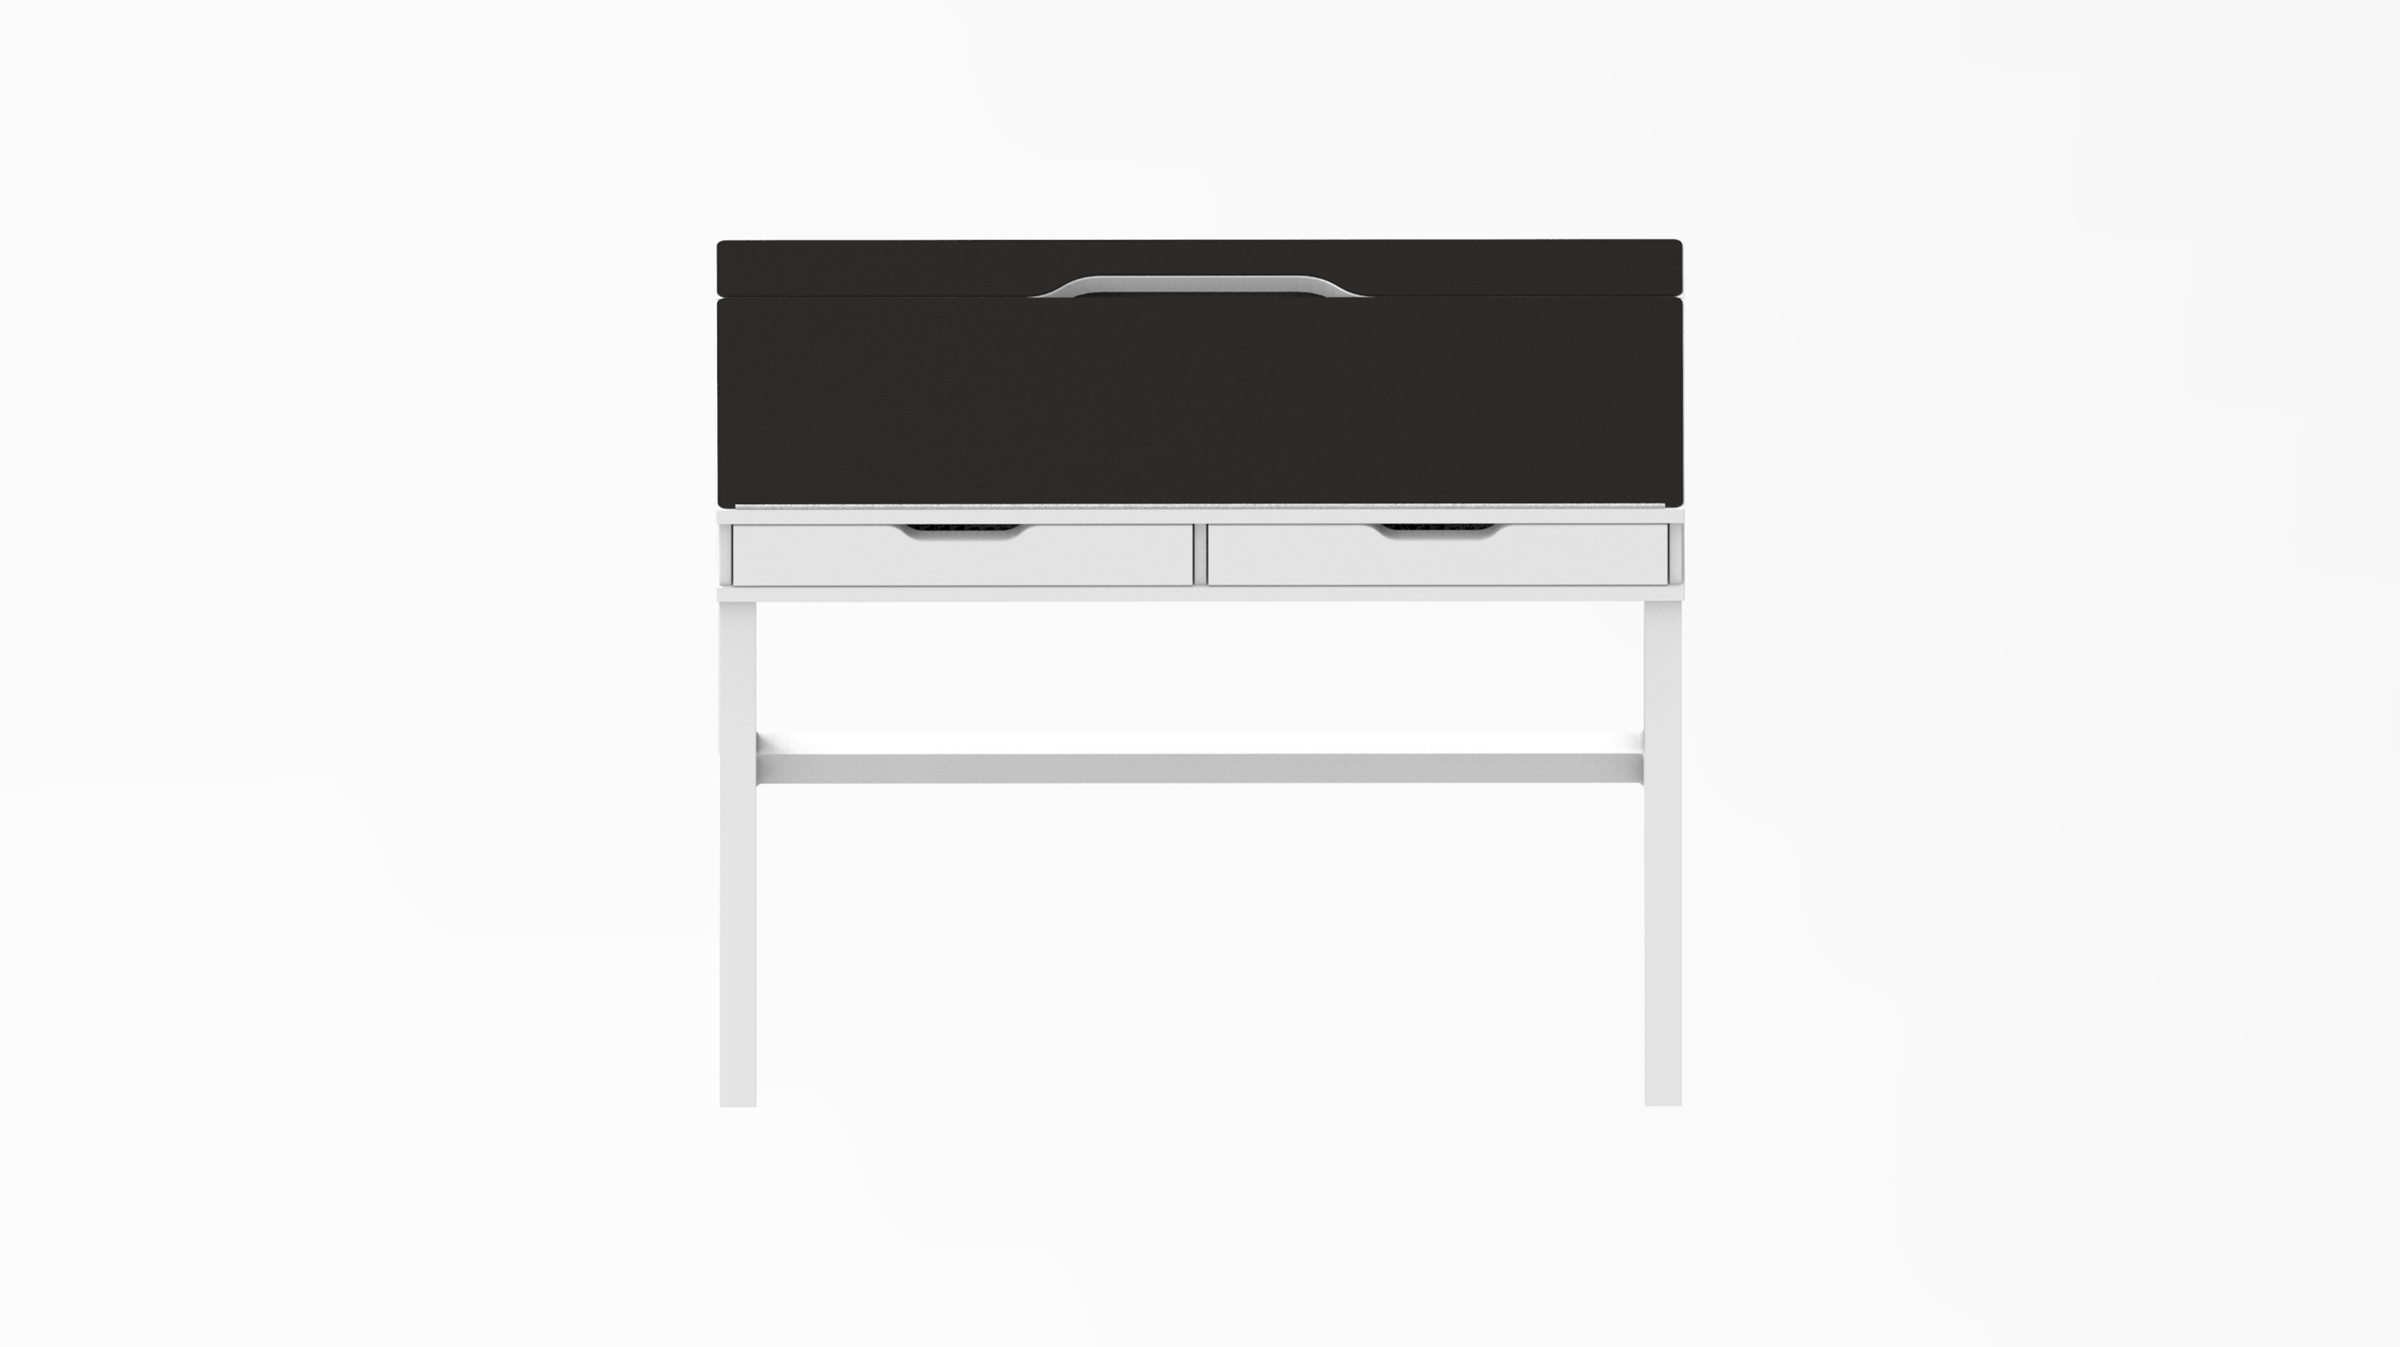 Black w/ White Stitching IKEA ALEX Desk Mat (39" / 100 cm) Full-desk Mouse Pad MK6E0OMJ24 |59152|